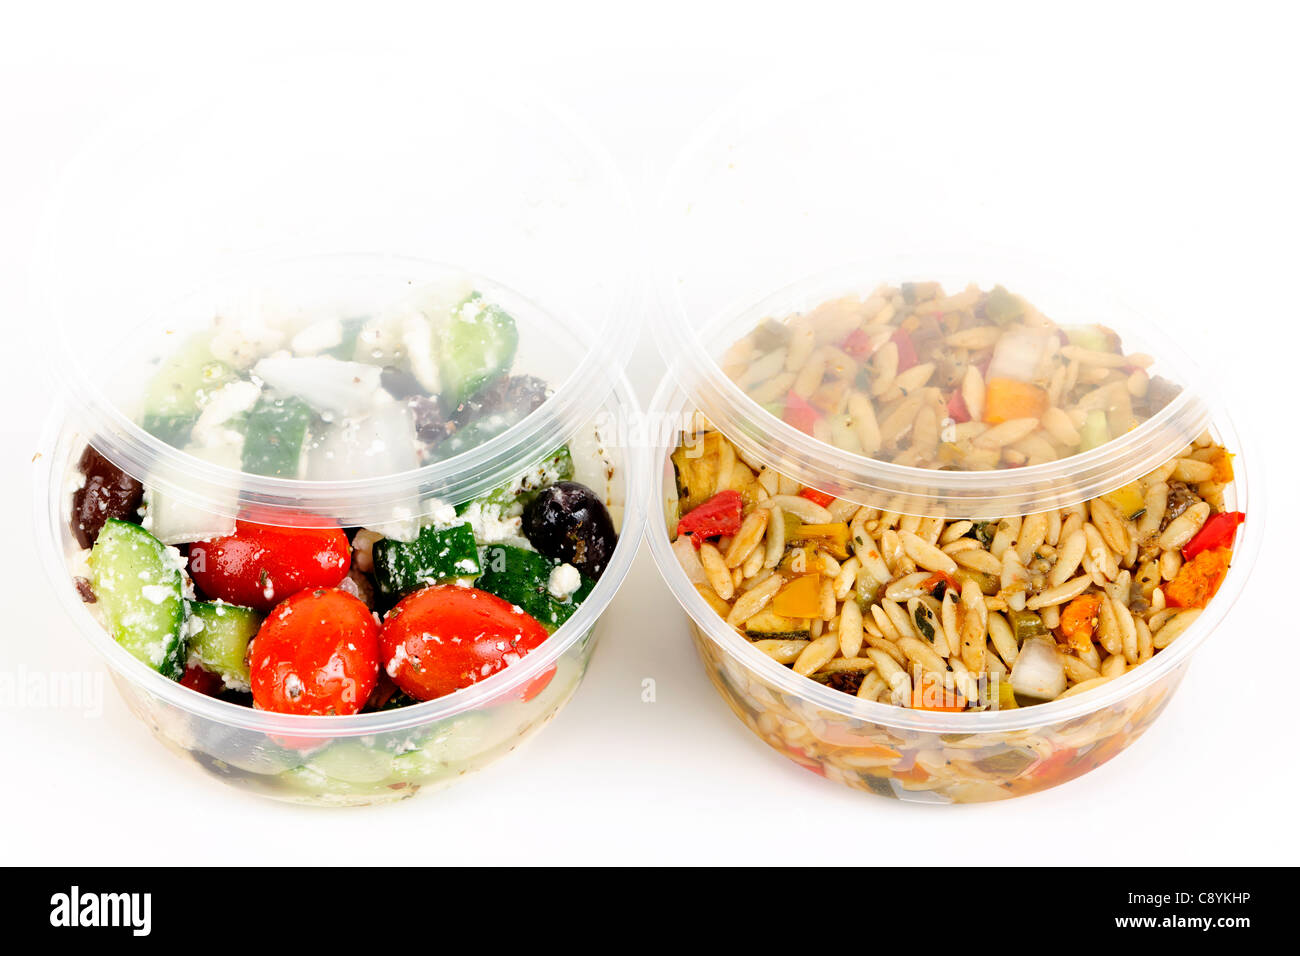 https://c8.alamy.com/comp/C8YKHP/two-servings-of-prepared-salad-in-plastic-takeaway-containers-C8YKHP.jpg